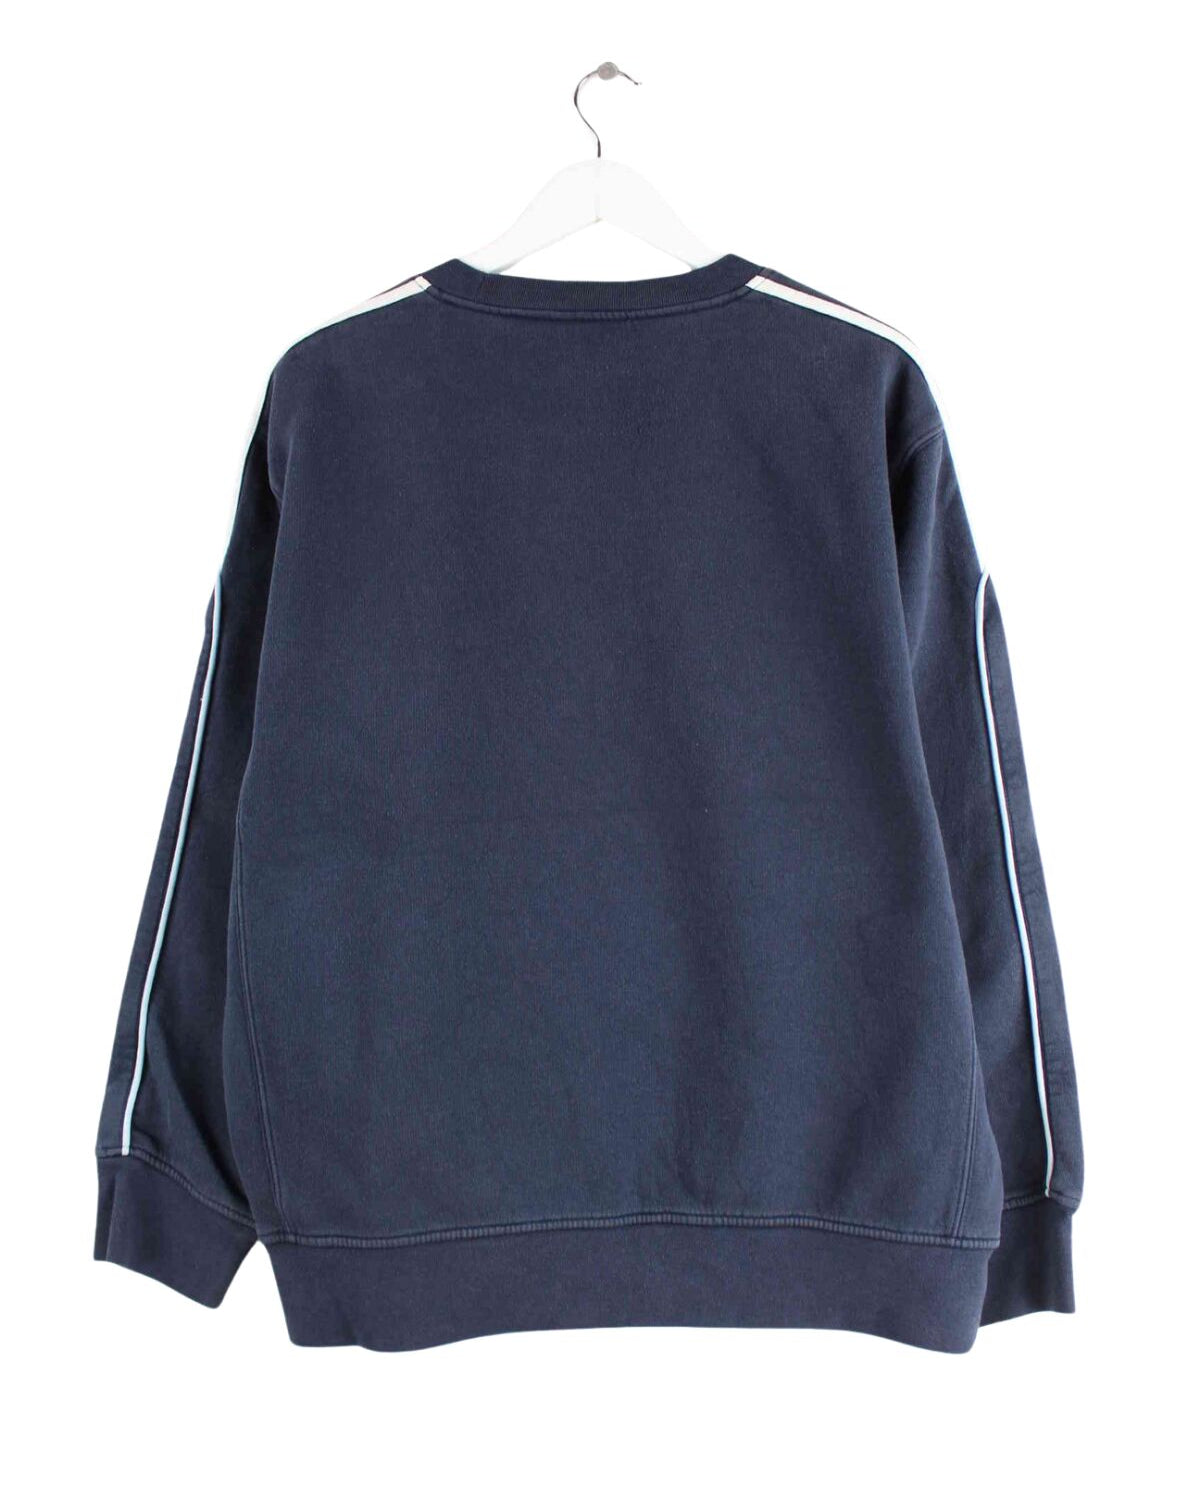 Adidas y2k Embroidered Performance Sweater Blau M (back image)